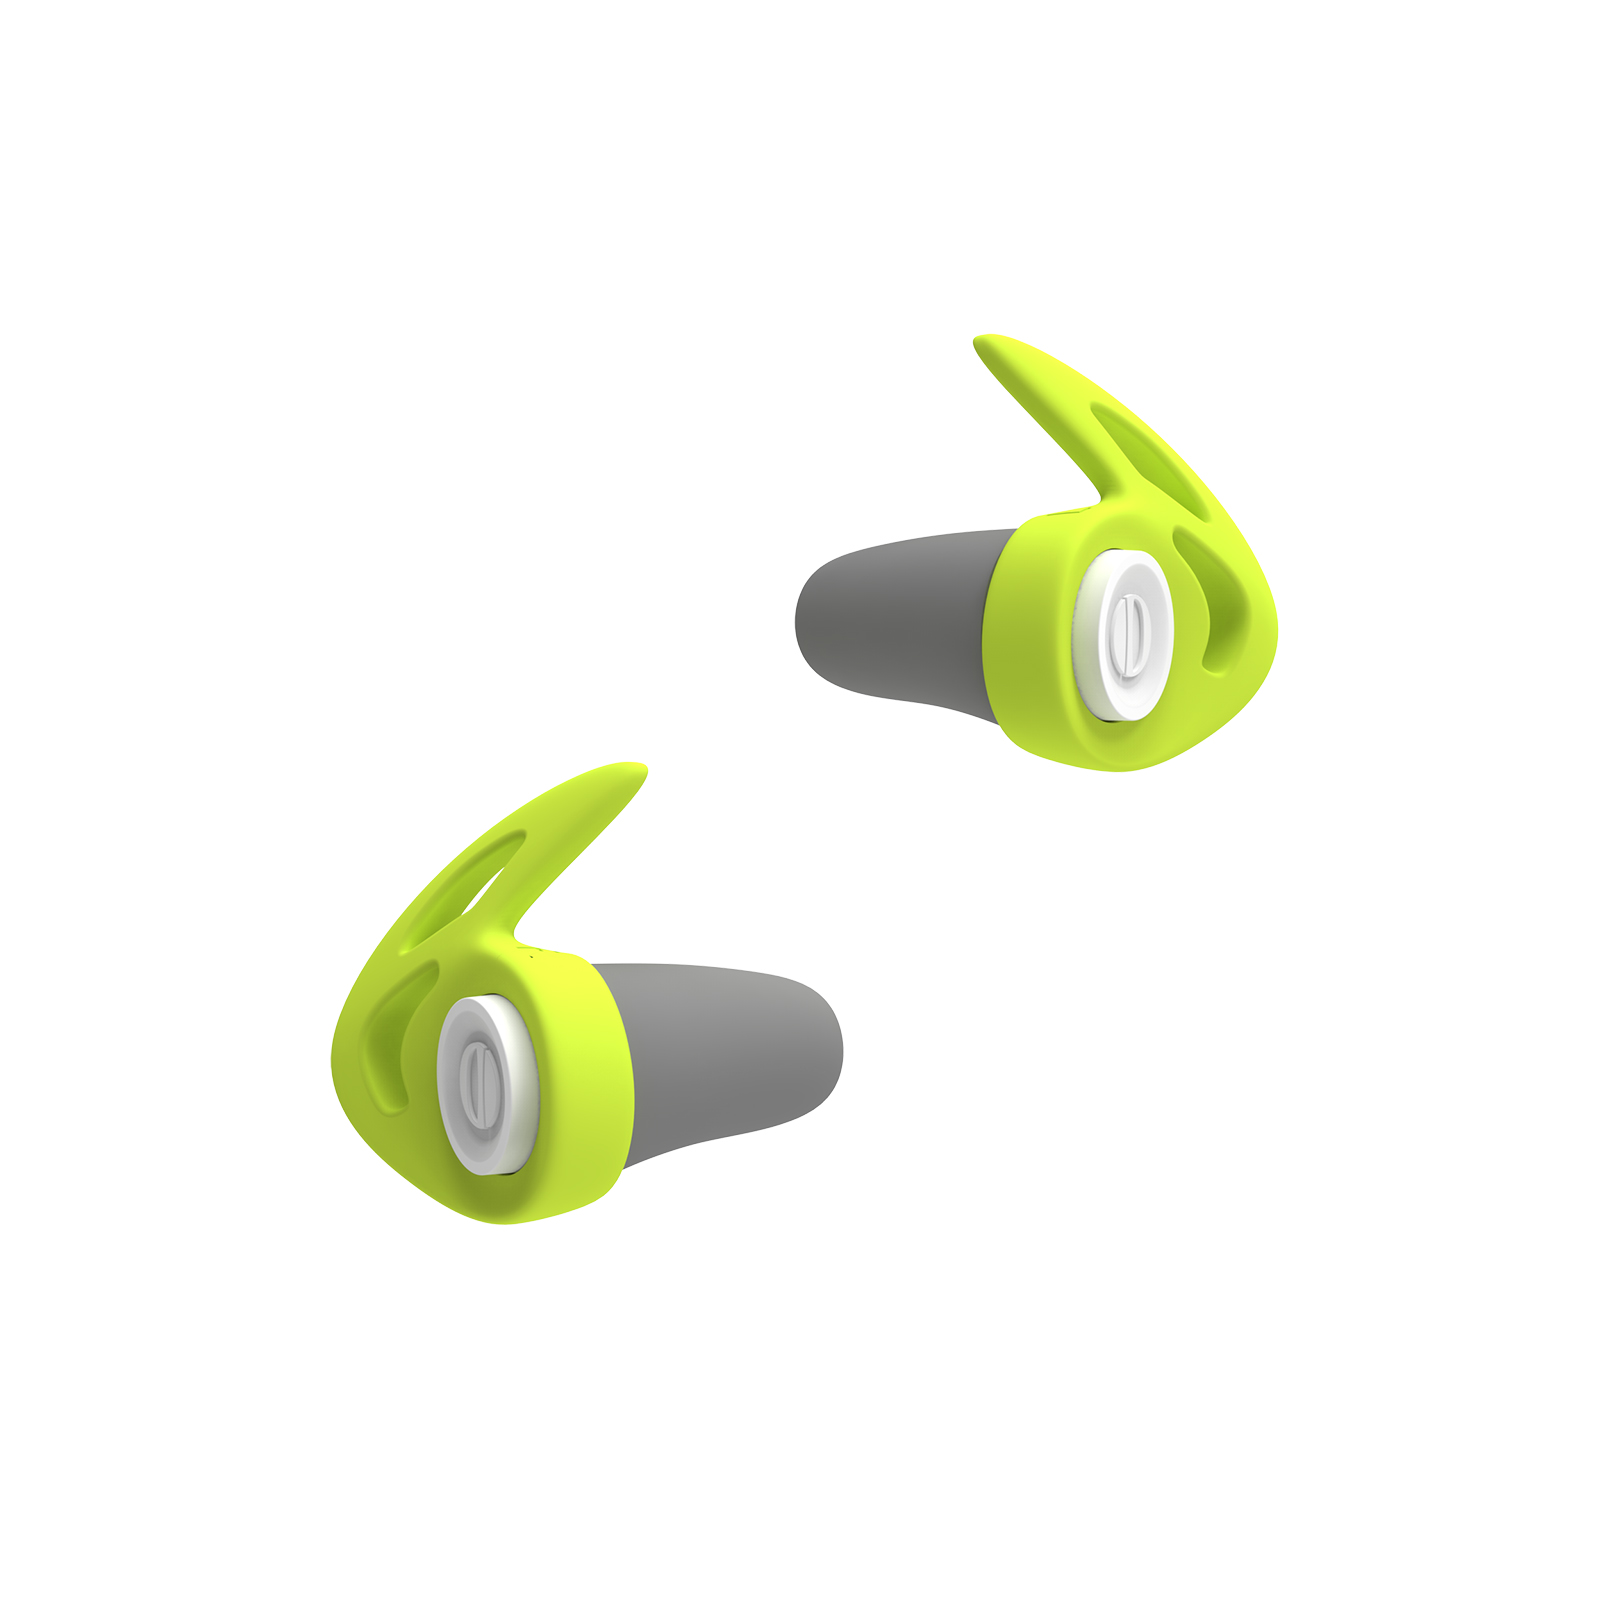 Noise Reduction Ear Plugs